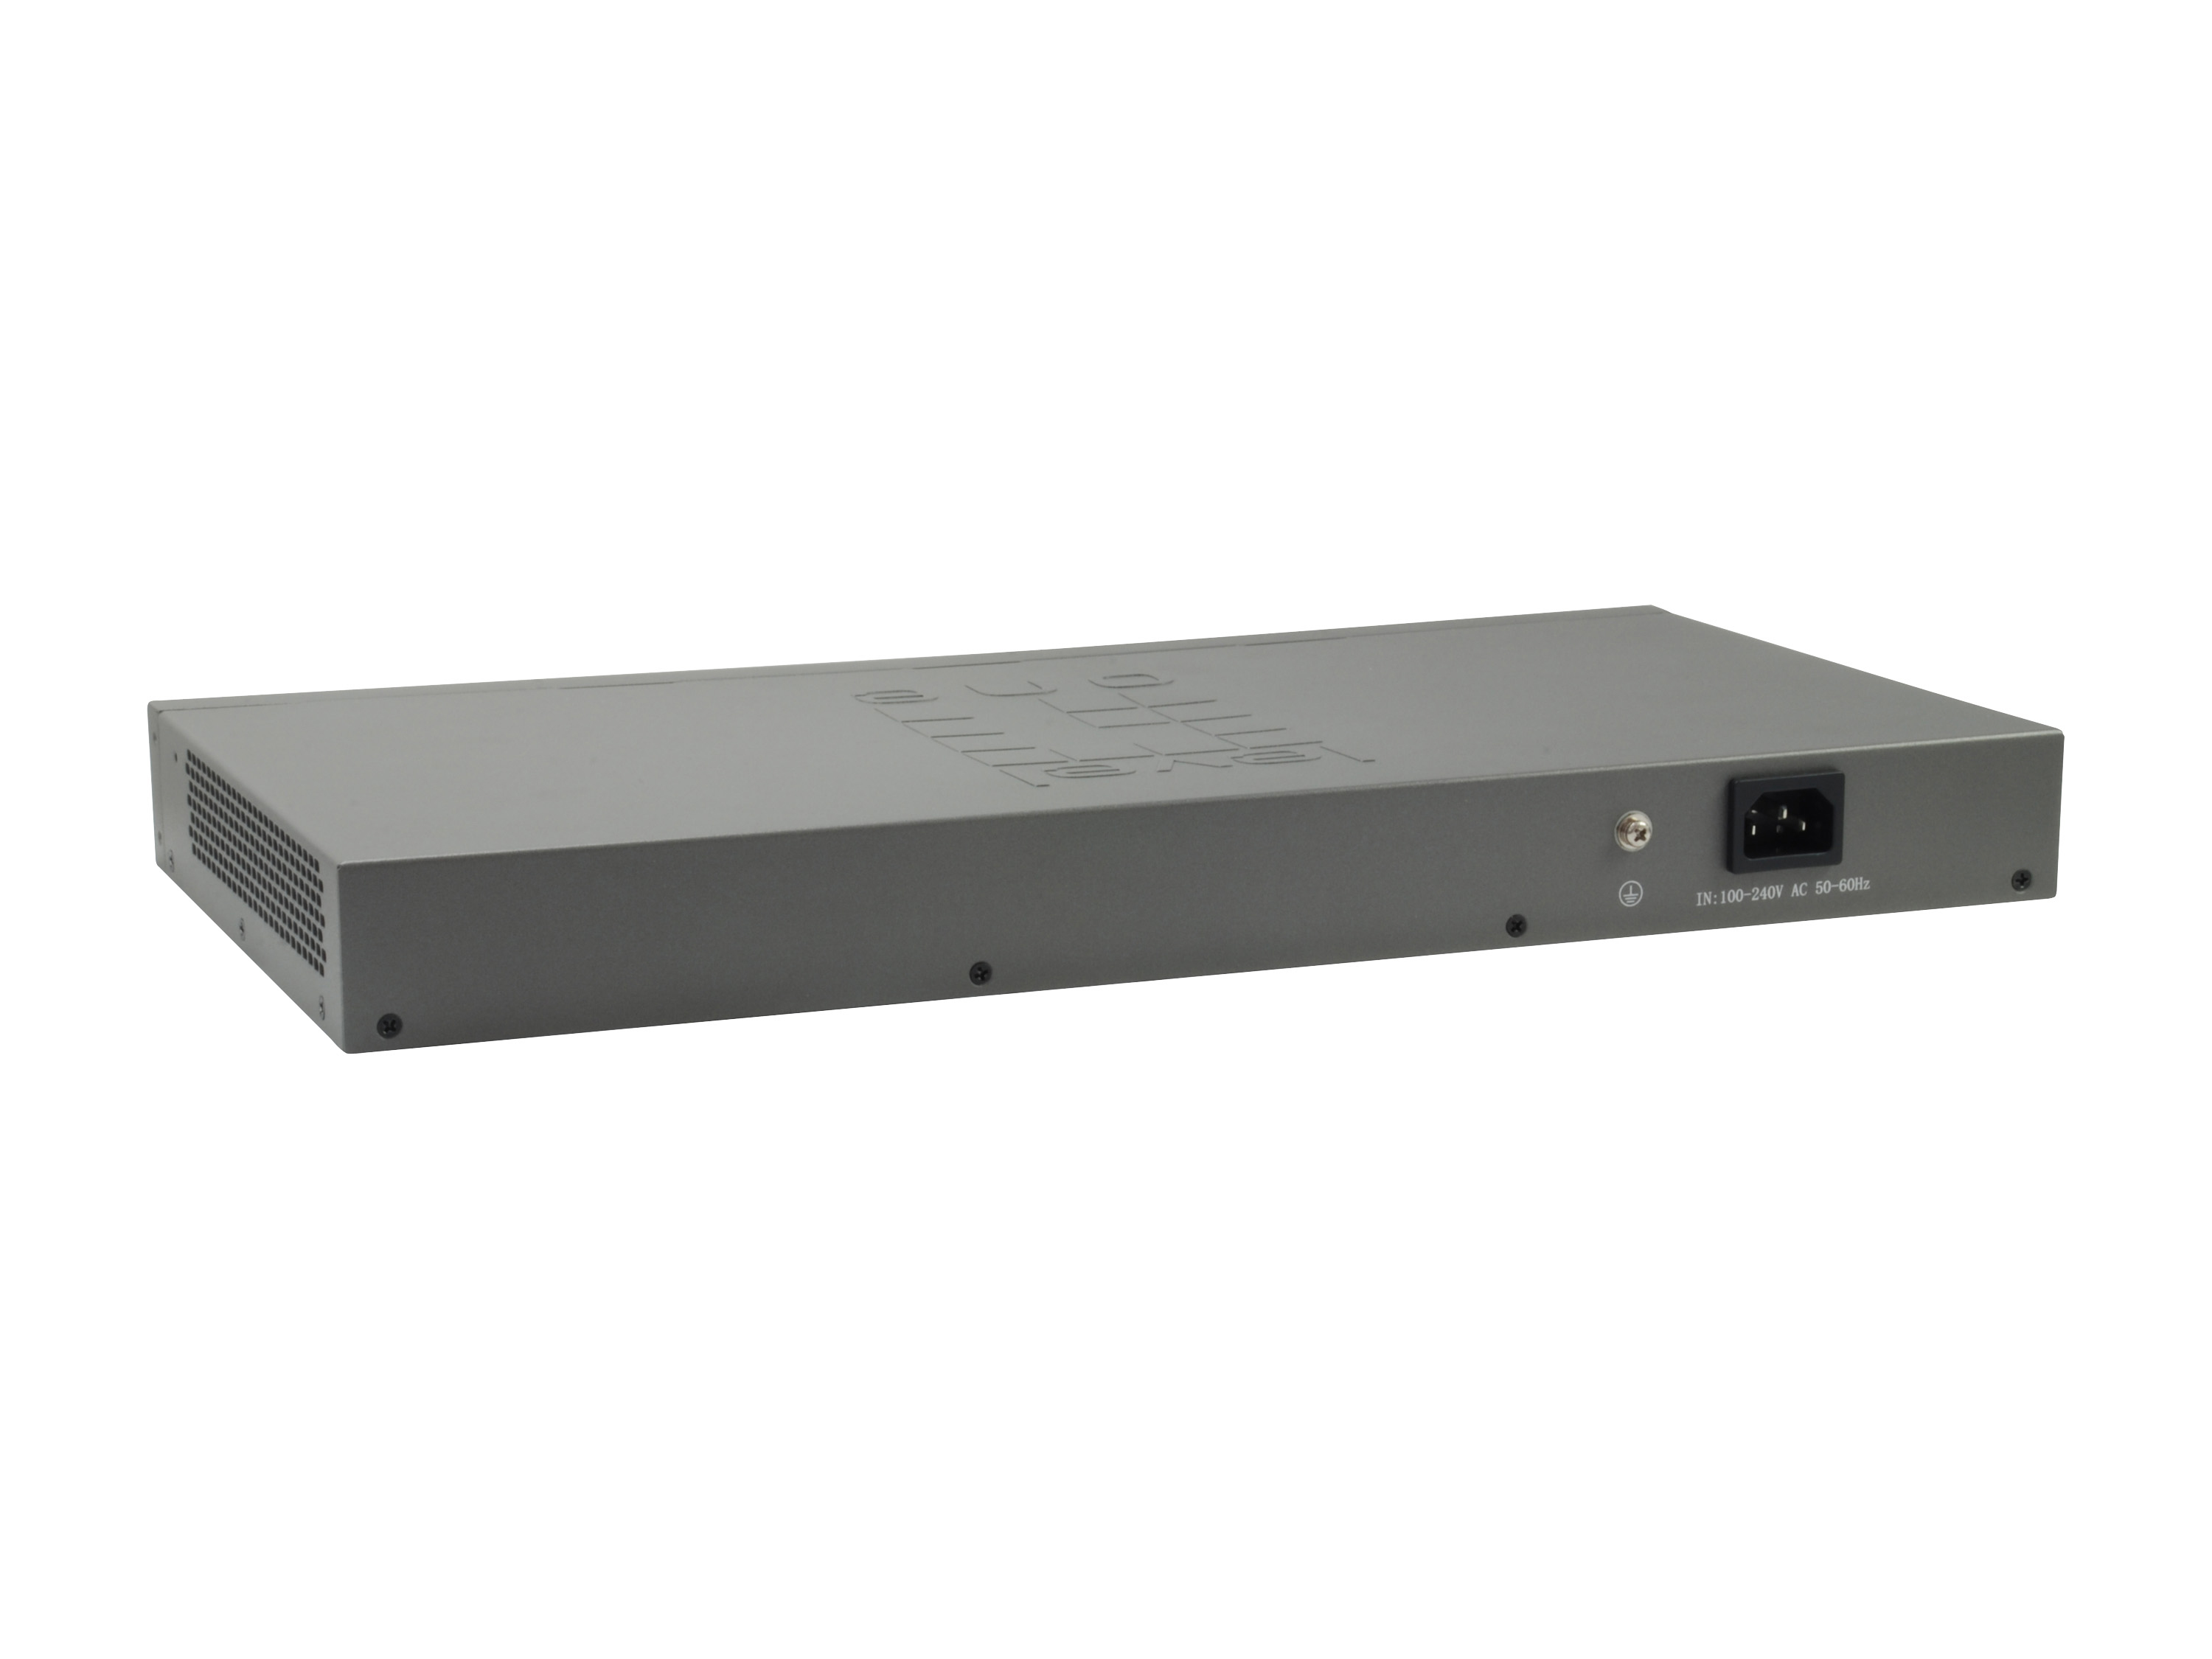 LevelOne FGU-5021 - Switch - unmanaged - 48 x 10/100 + 2 x Kombi-Gigabit-SFP